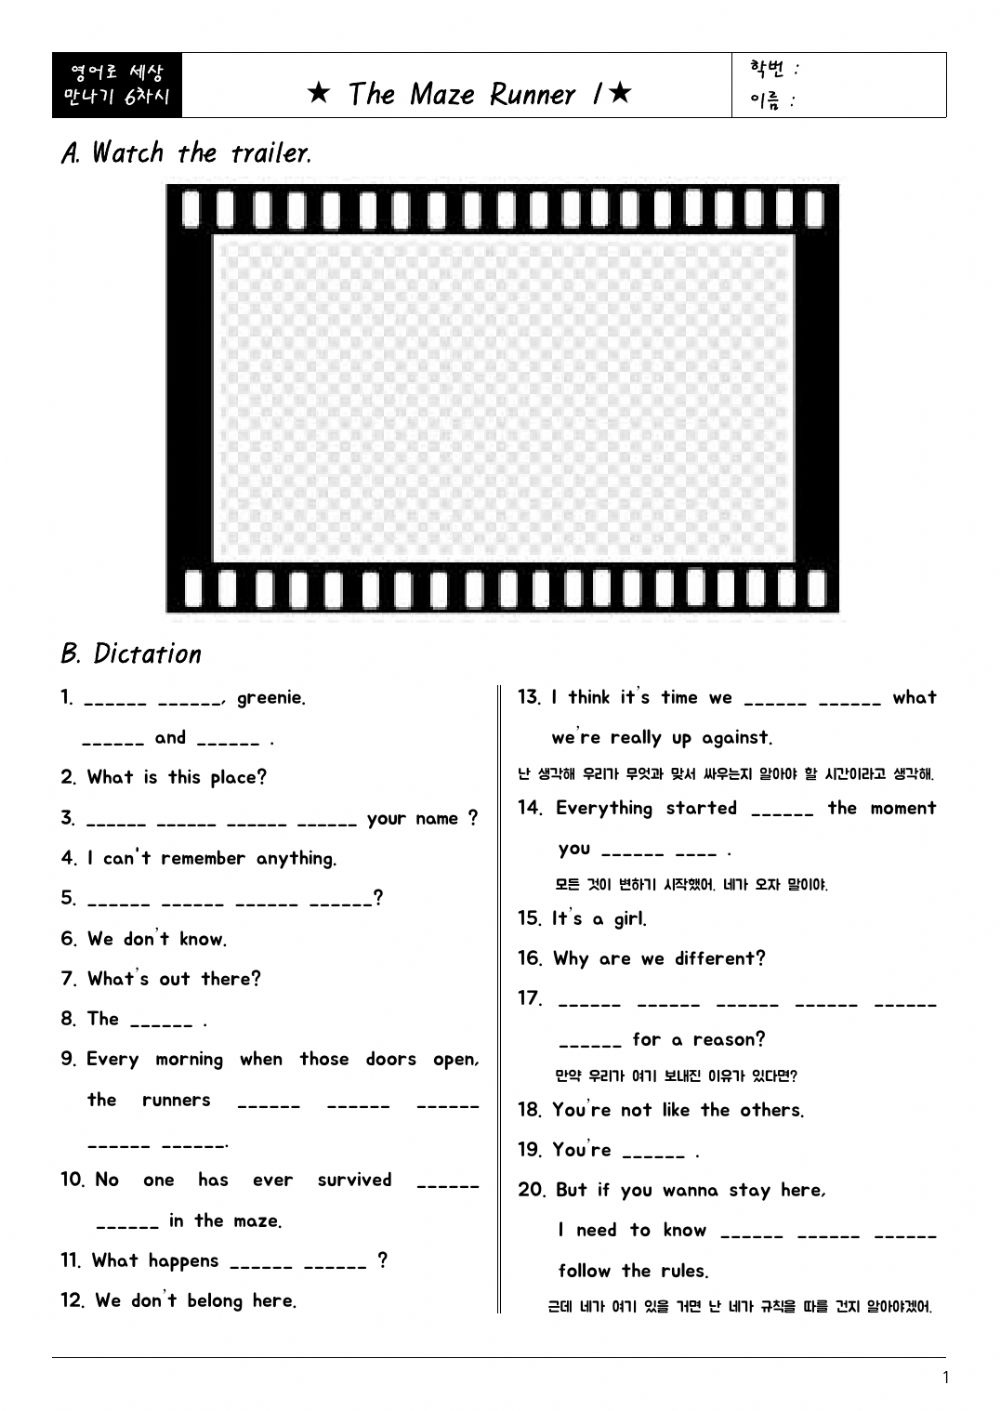 The Maze Runner Movie Trailer Worksheet